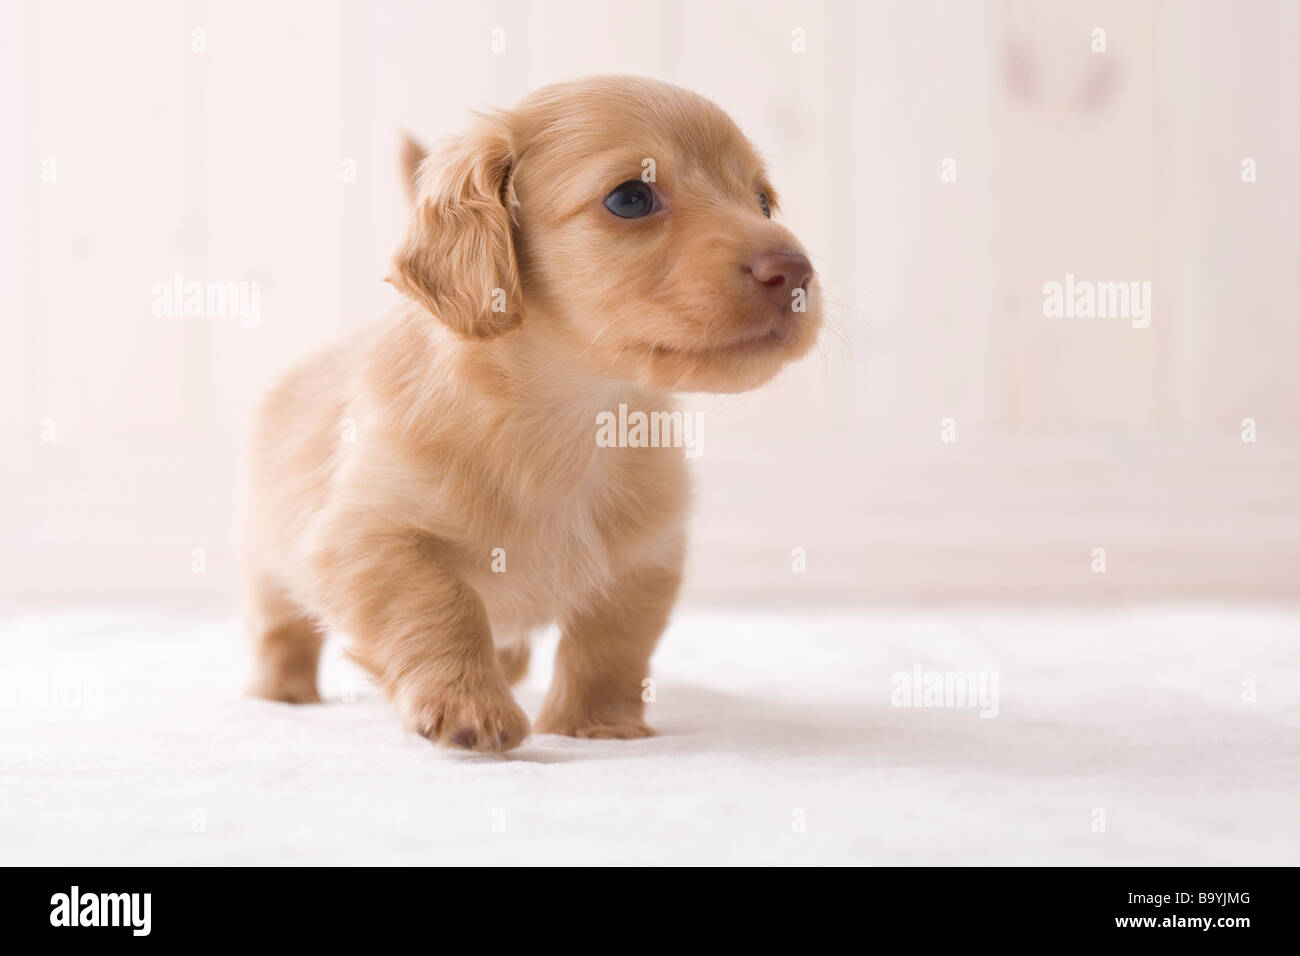 Miniature dachshund walking Stock Photo